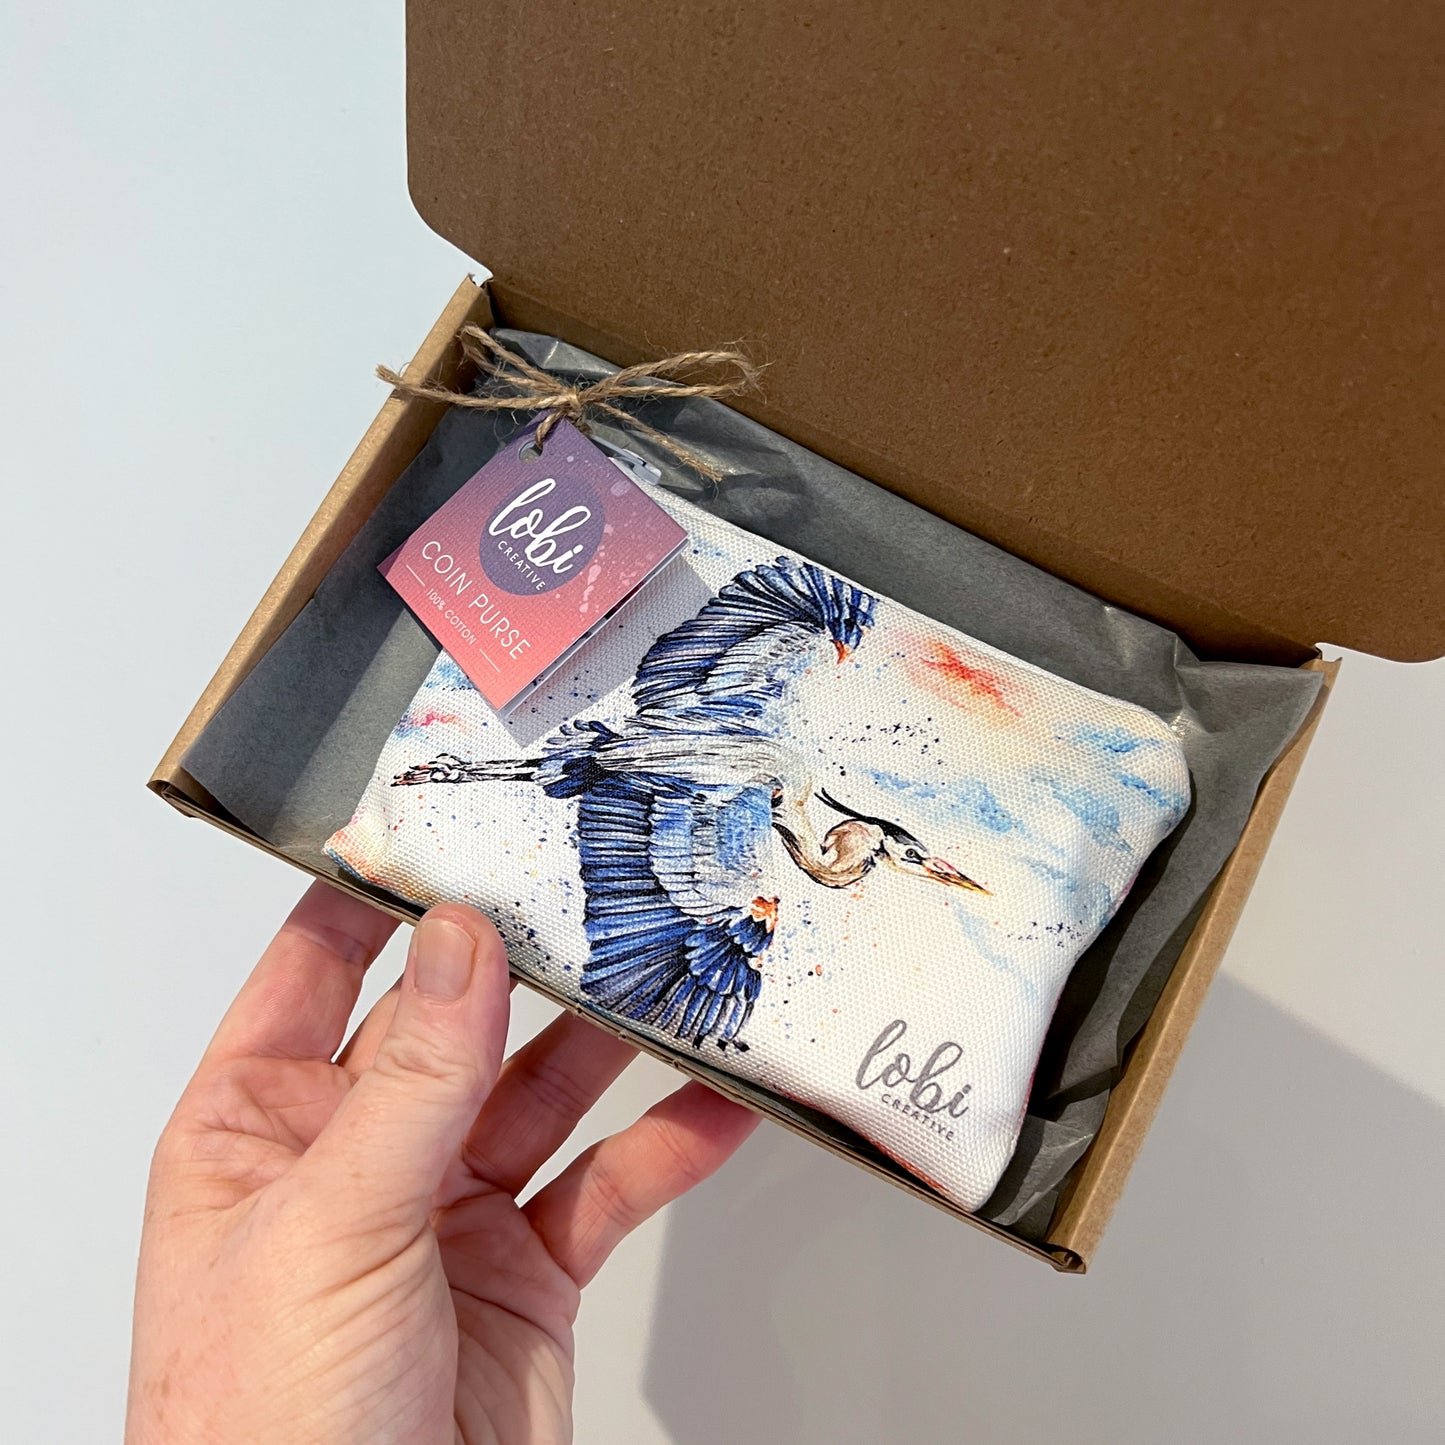 Watercolour Blue Heron Cotton Coin Purse & Gift Box